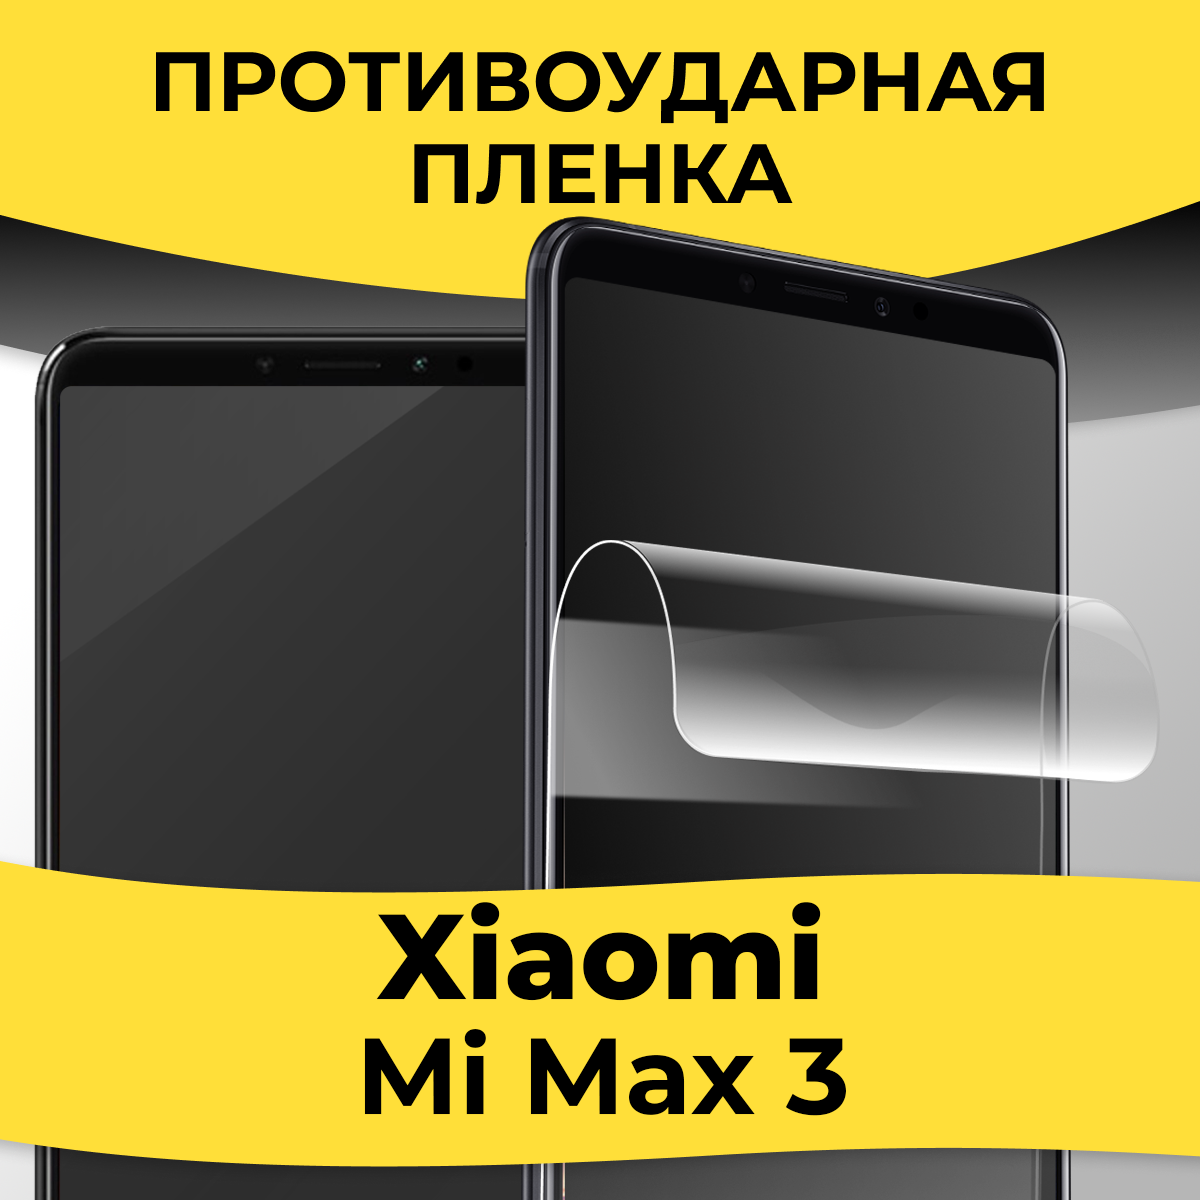 Комплект 2 шт. Гидрогелевая пленка для смартфона Xiaomi Mi Max 3 / Защитная пленка на телефон Сяоми Ми Макс 3 / Глянцевая пленка